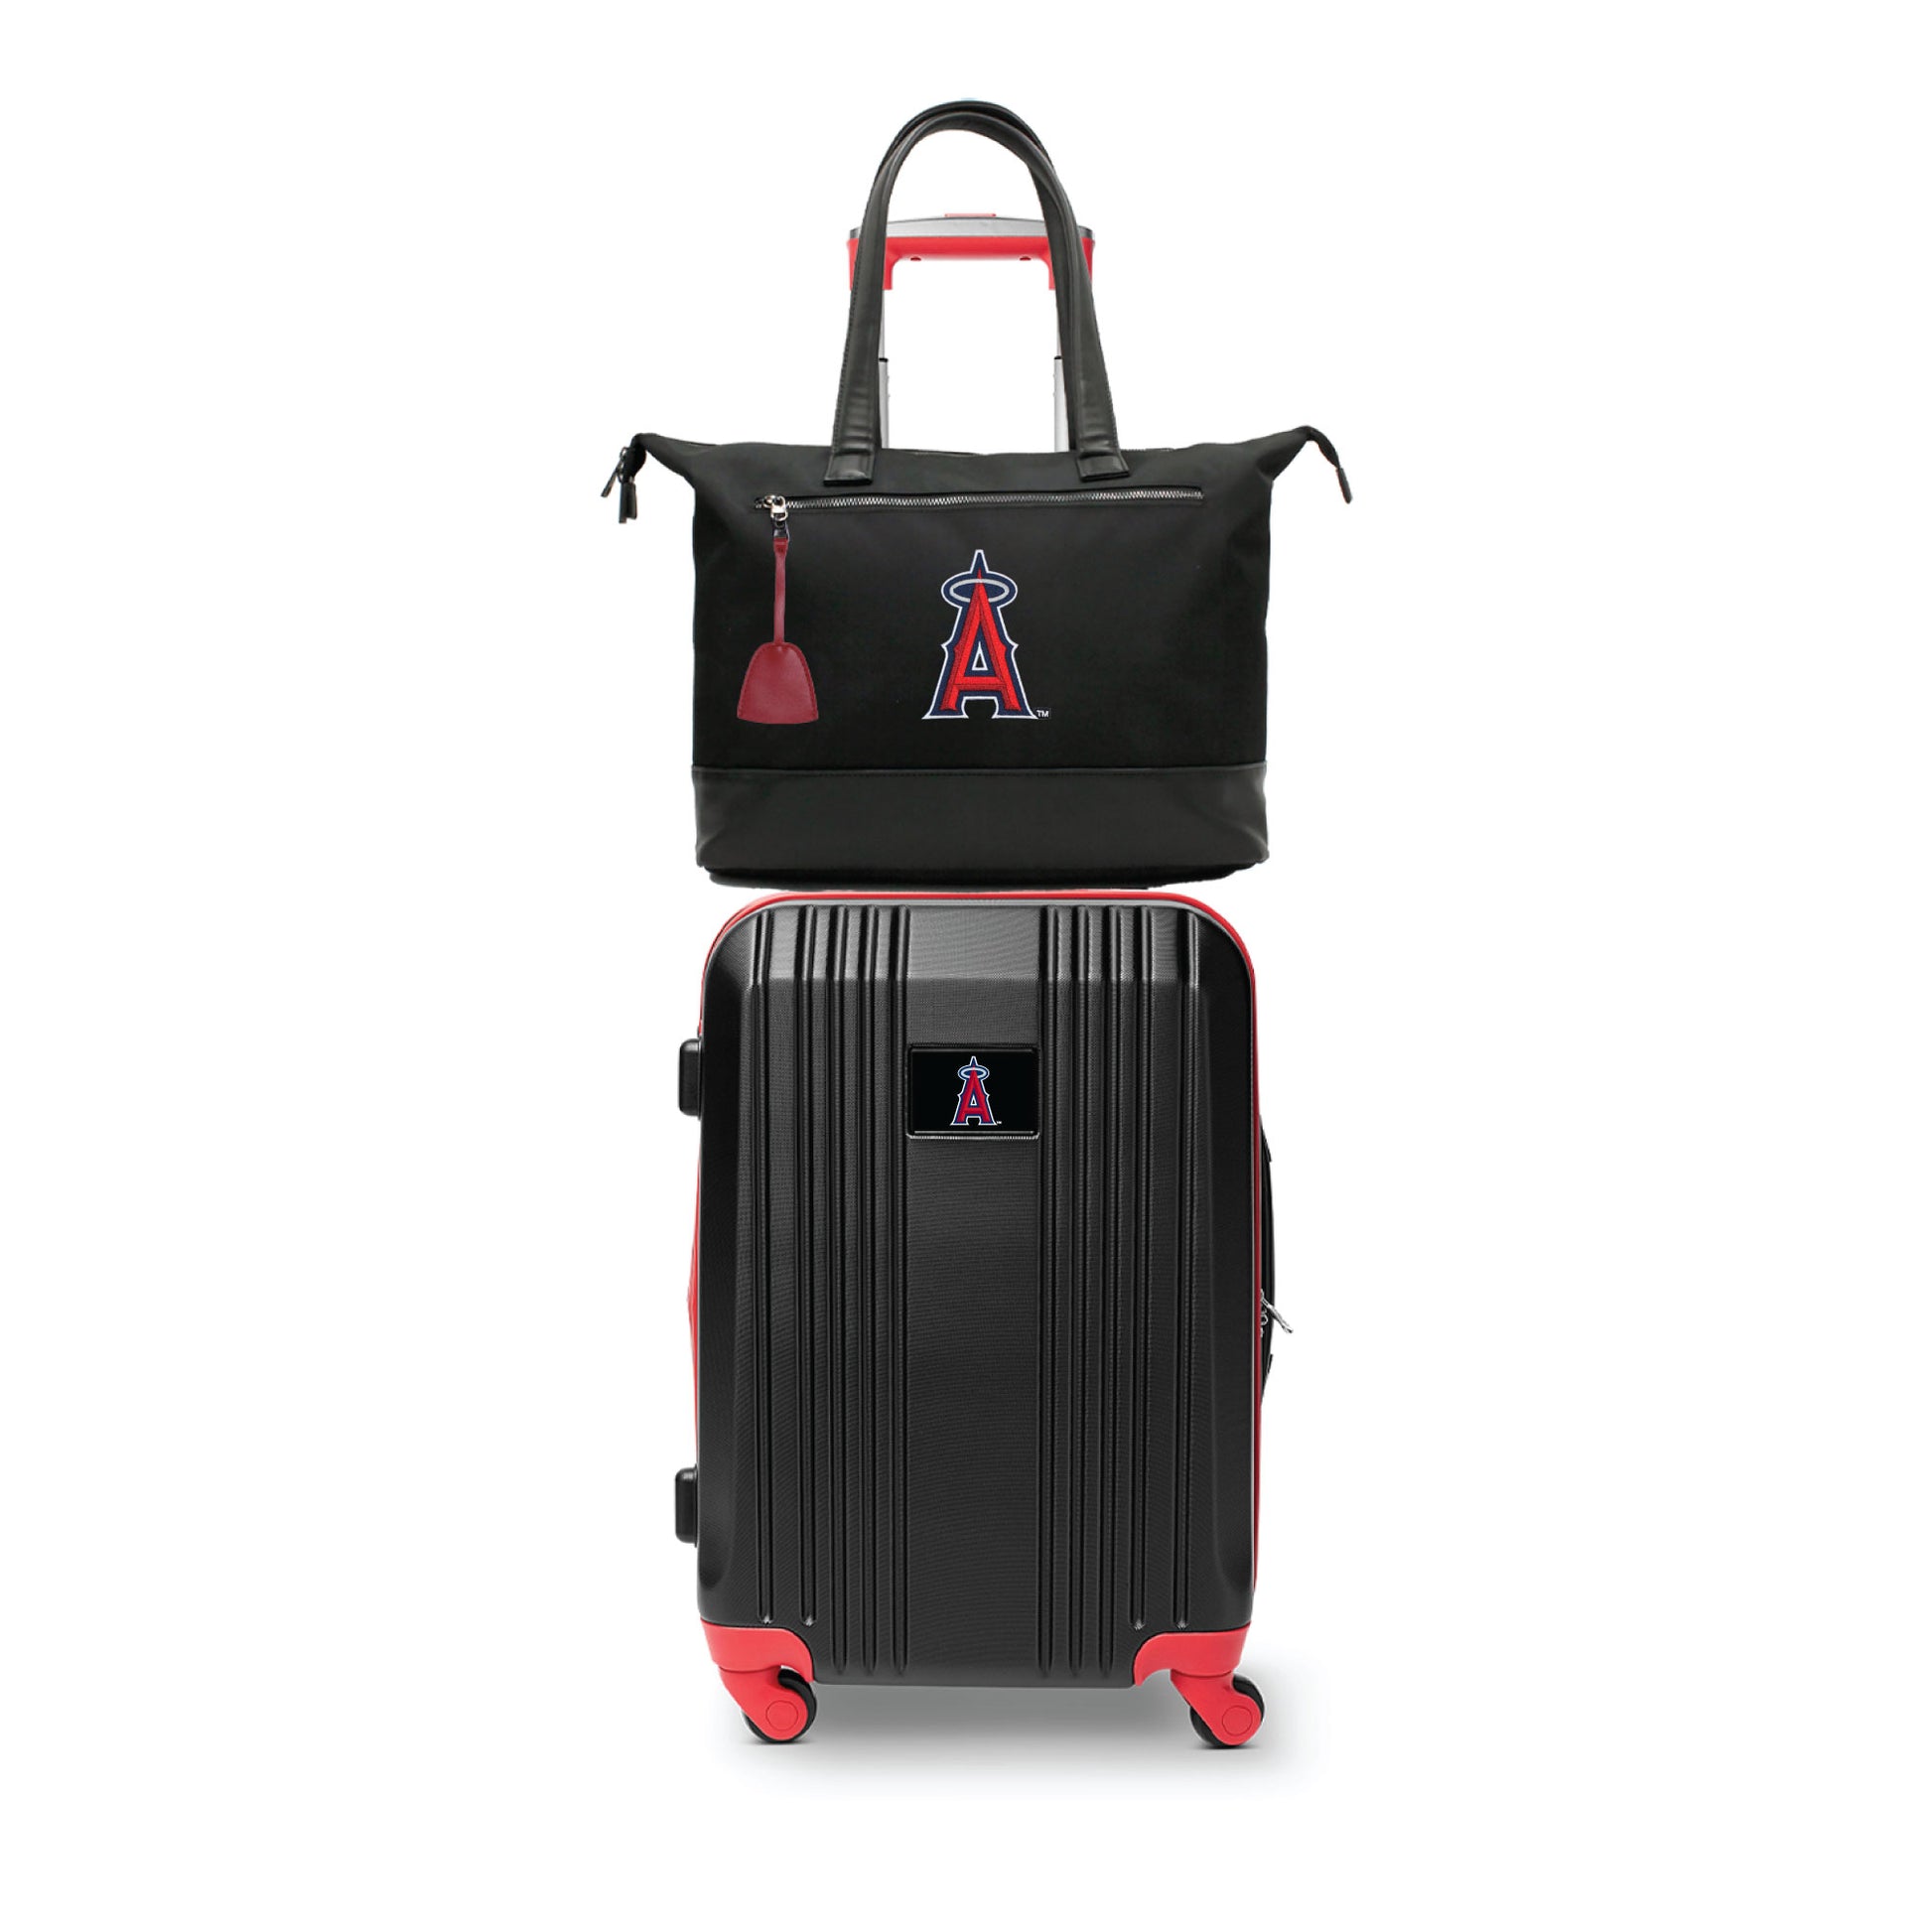 Los Angeles Angels Premium Laptop Tote Bag and Luggage Set